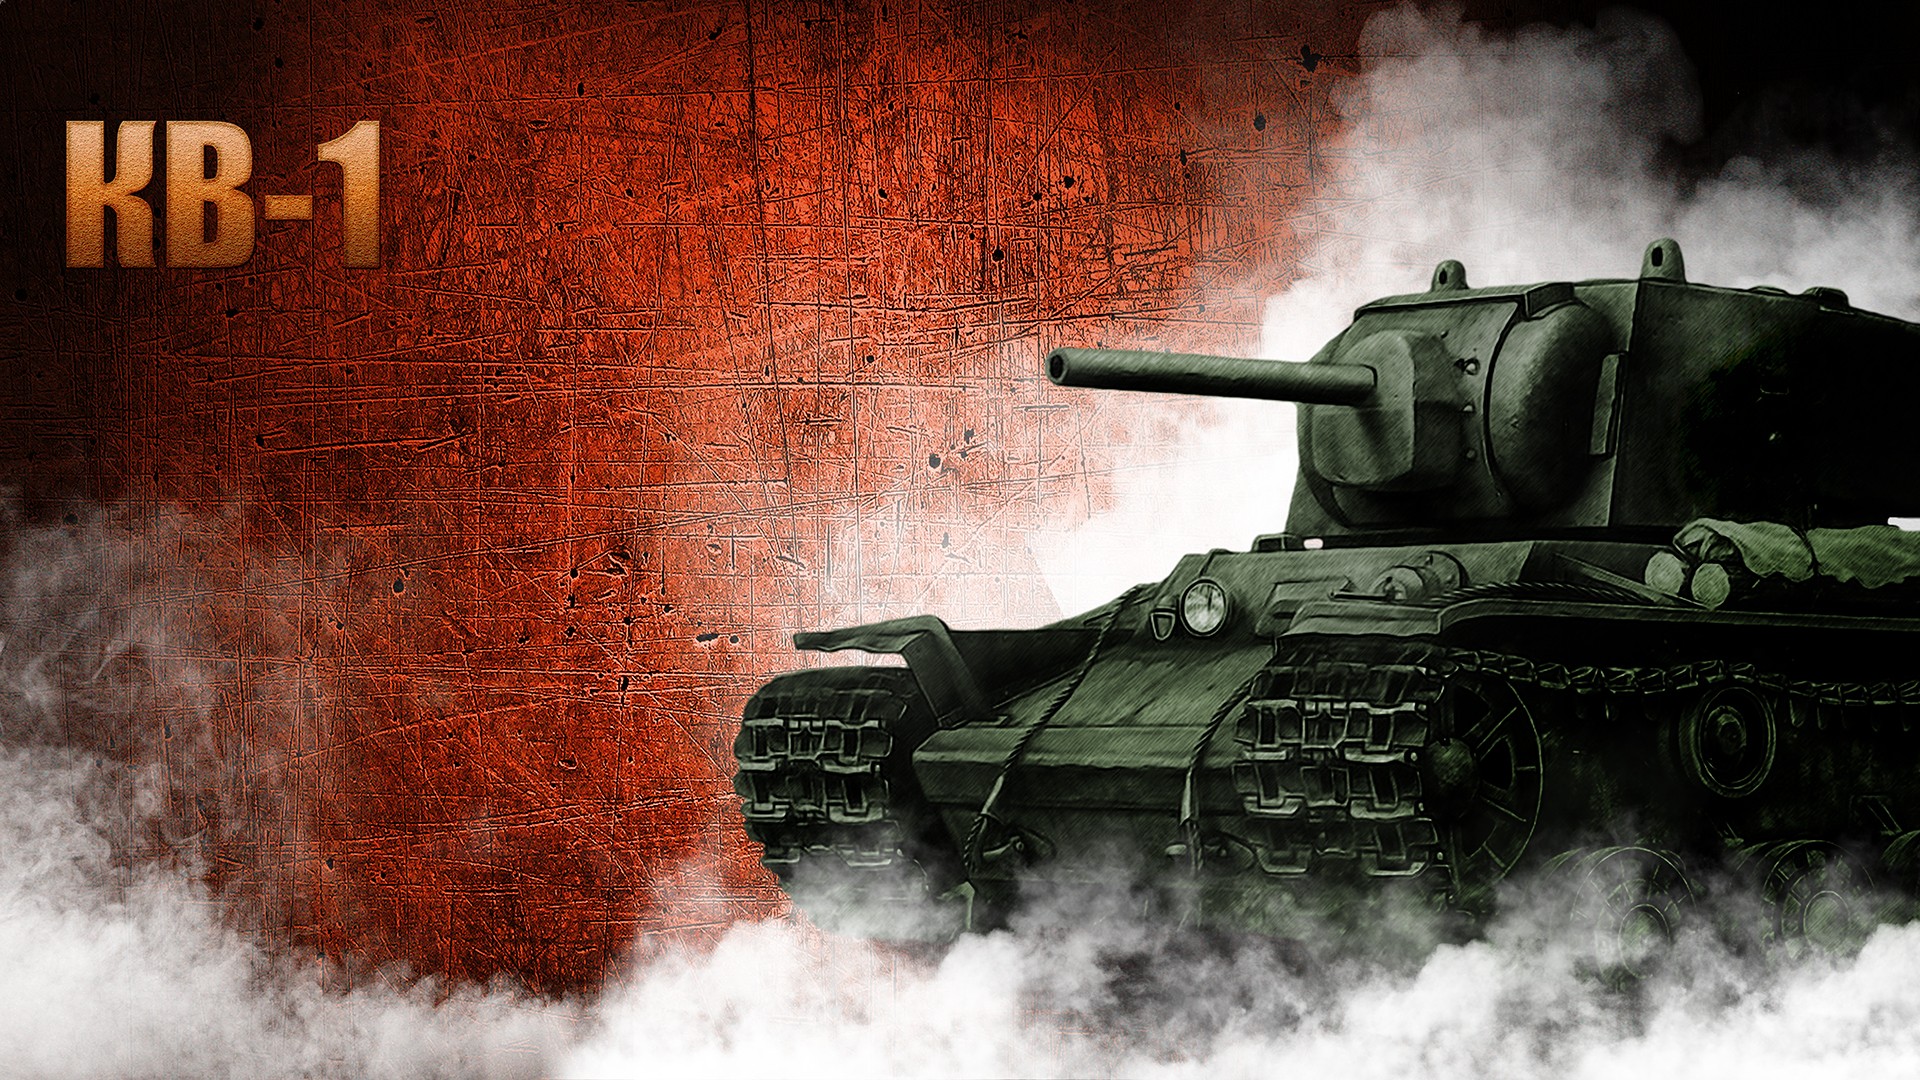 Кв-1с World of Tanks Blitz